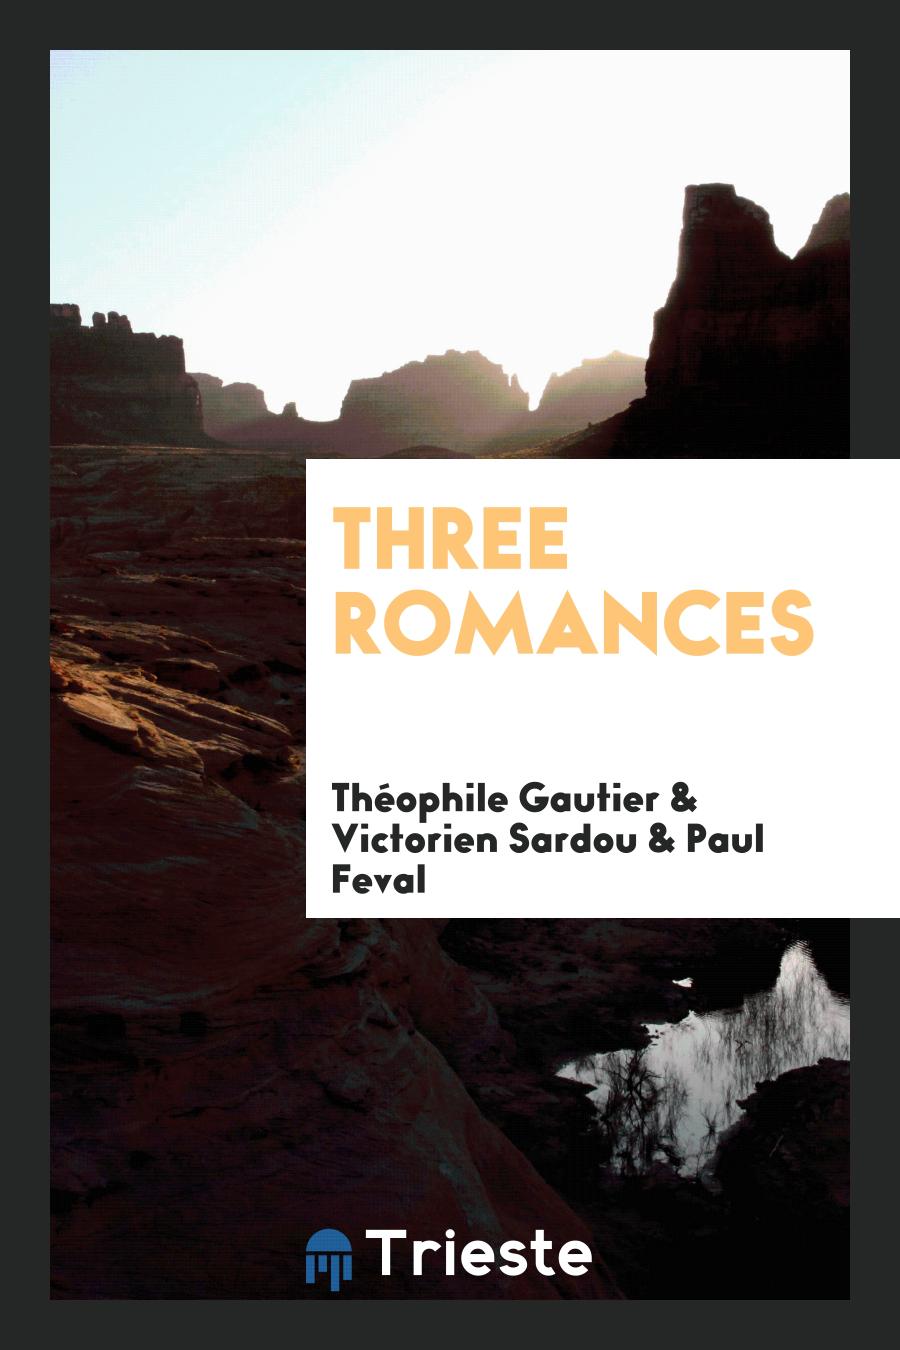 Three romances